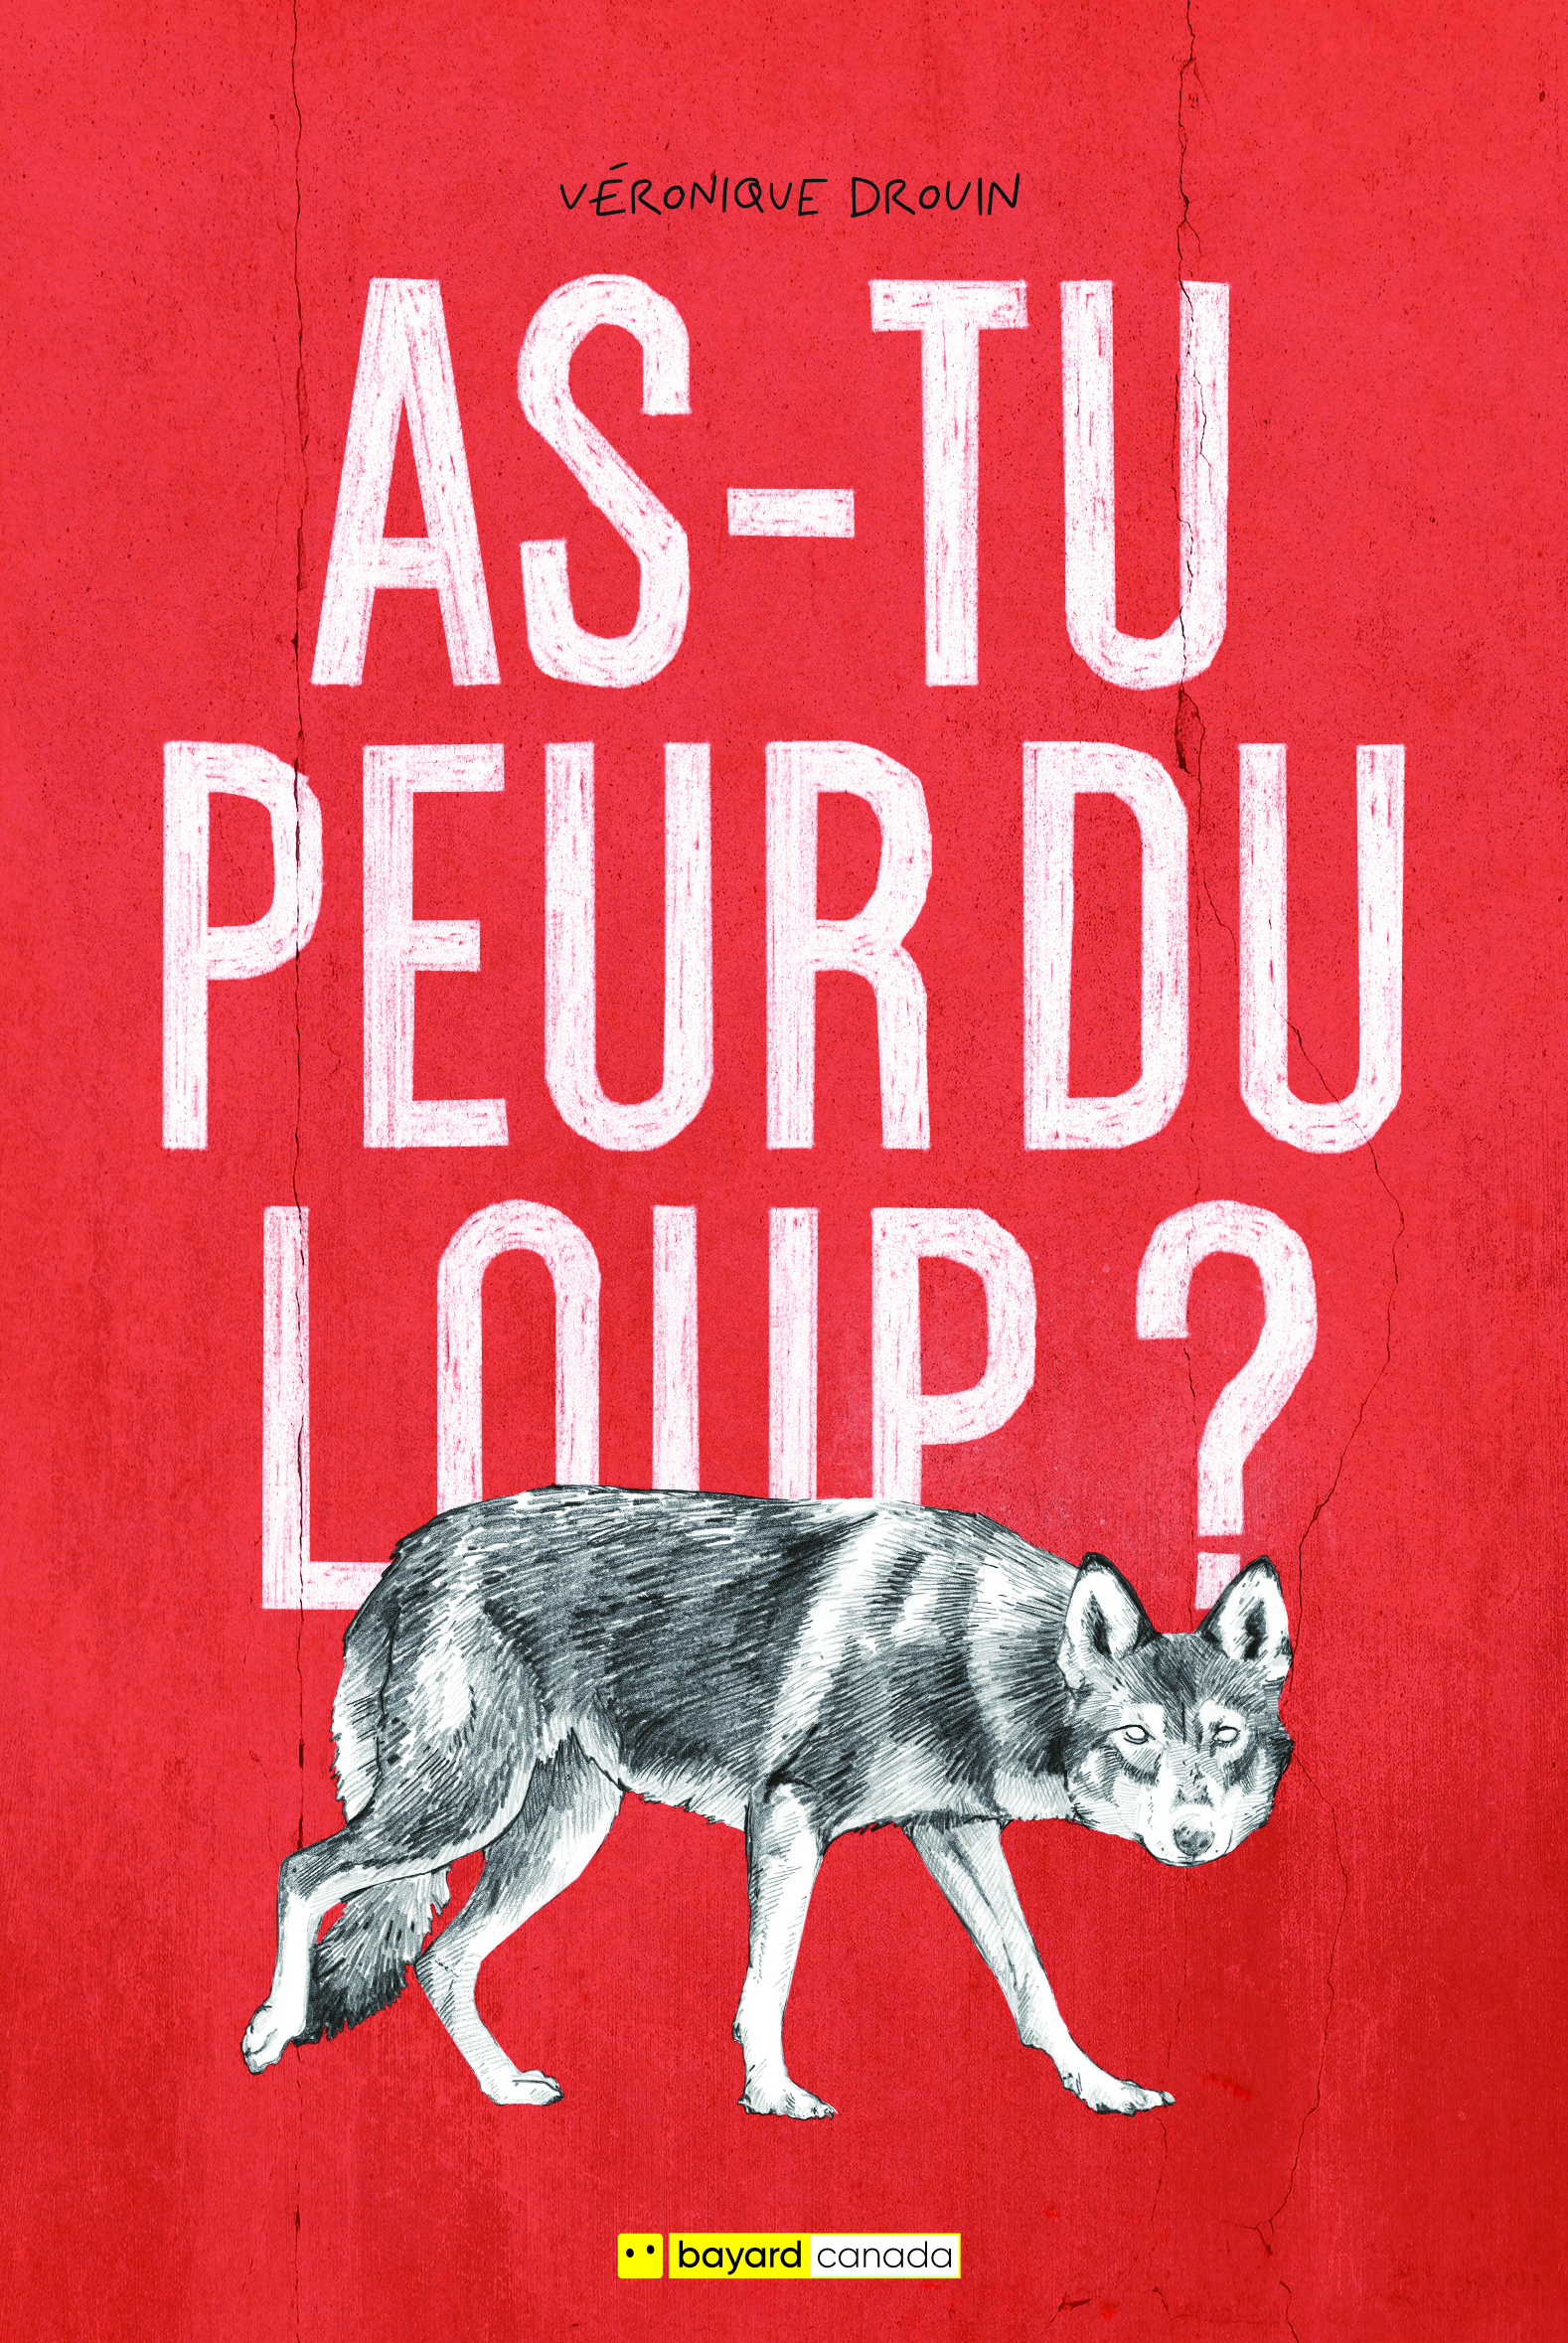 Book cover of AS-TU PEUR DU LOUP?